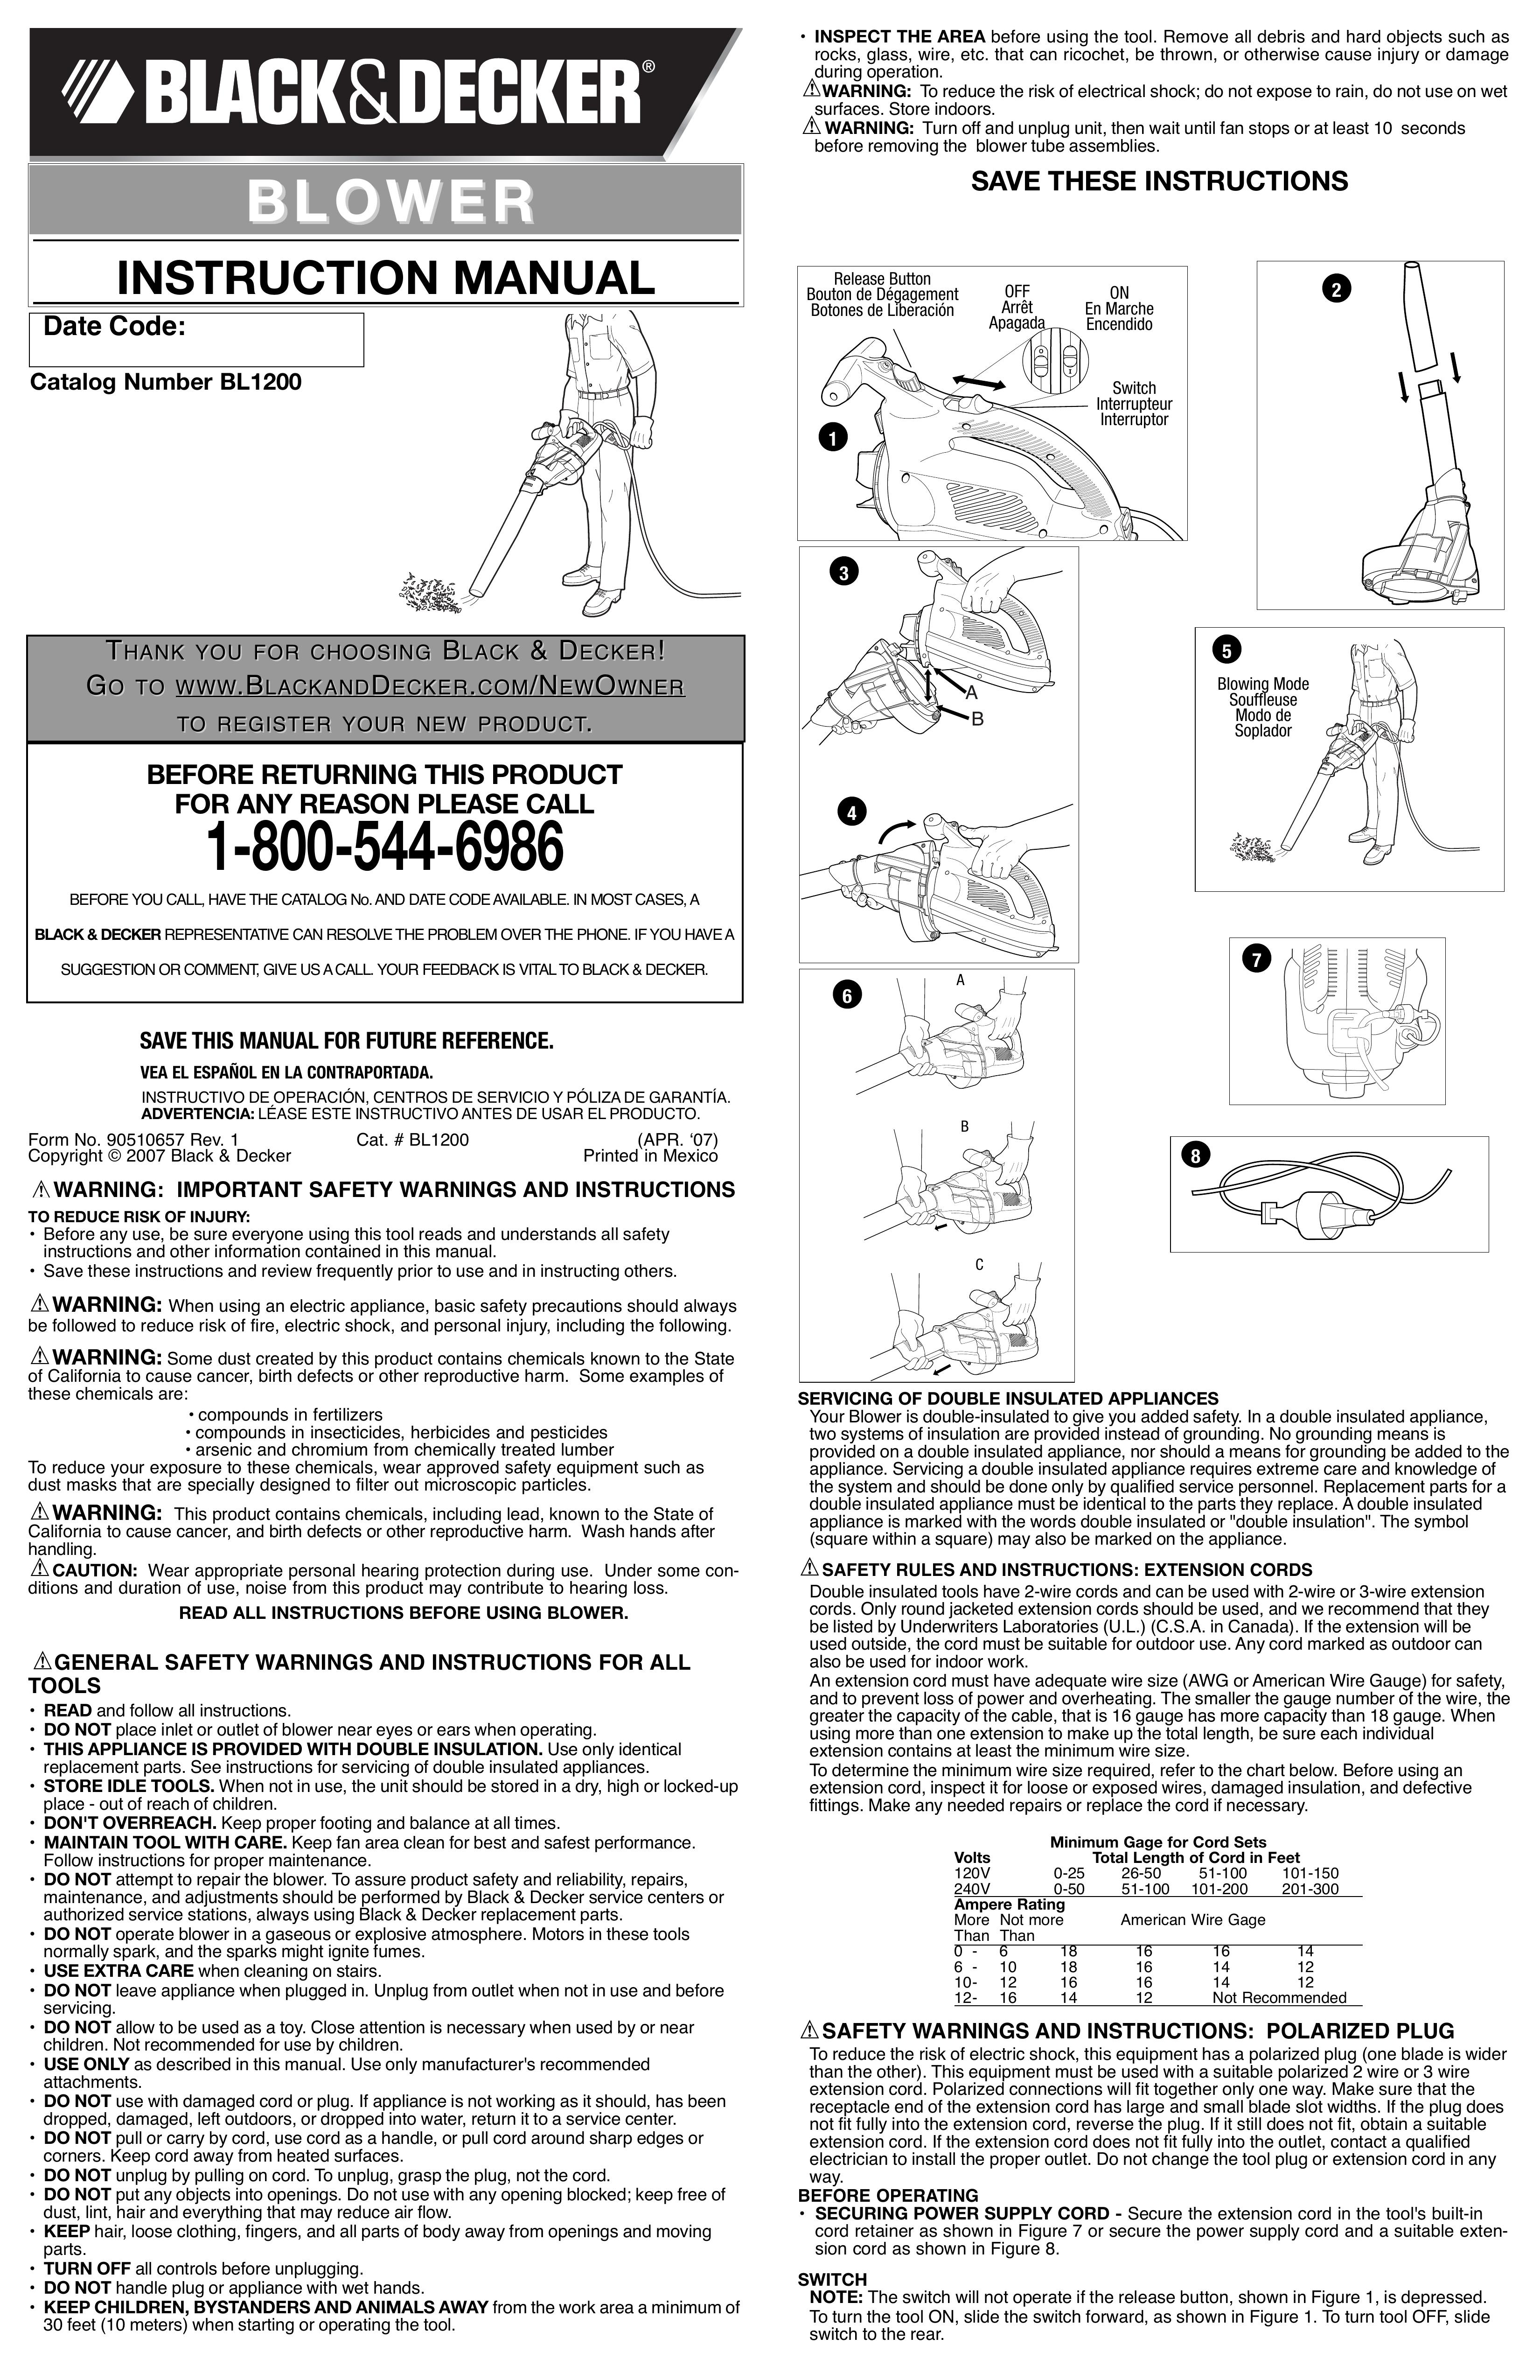 Black & Decker BL1200 Blower User Manual